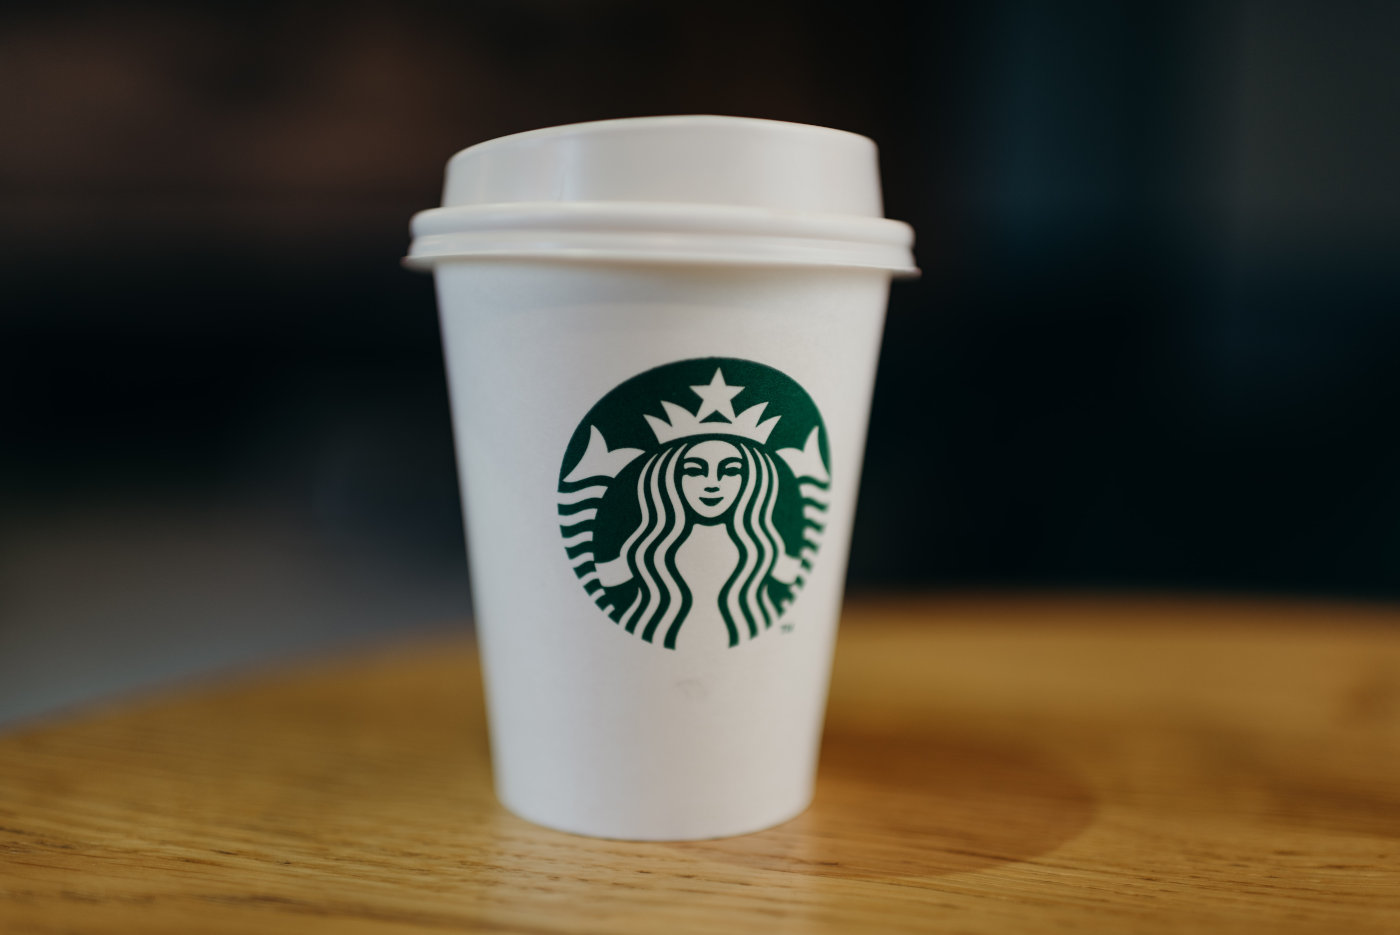 Starbucks Kaffee an Bord von Condor